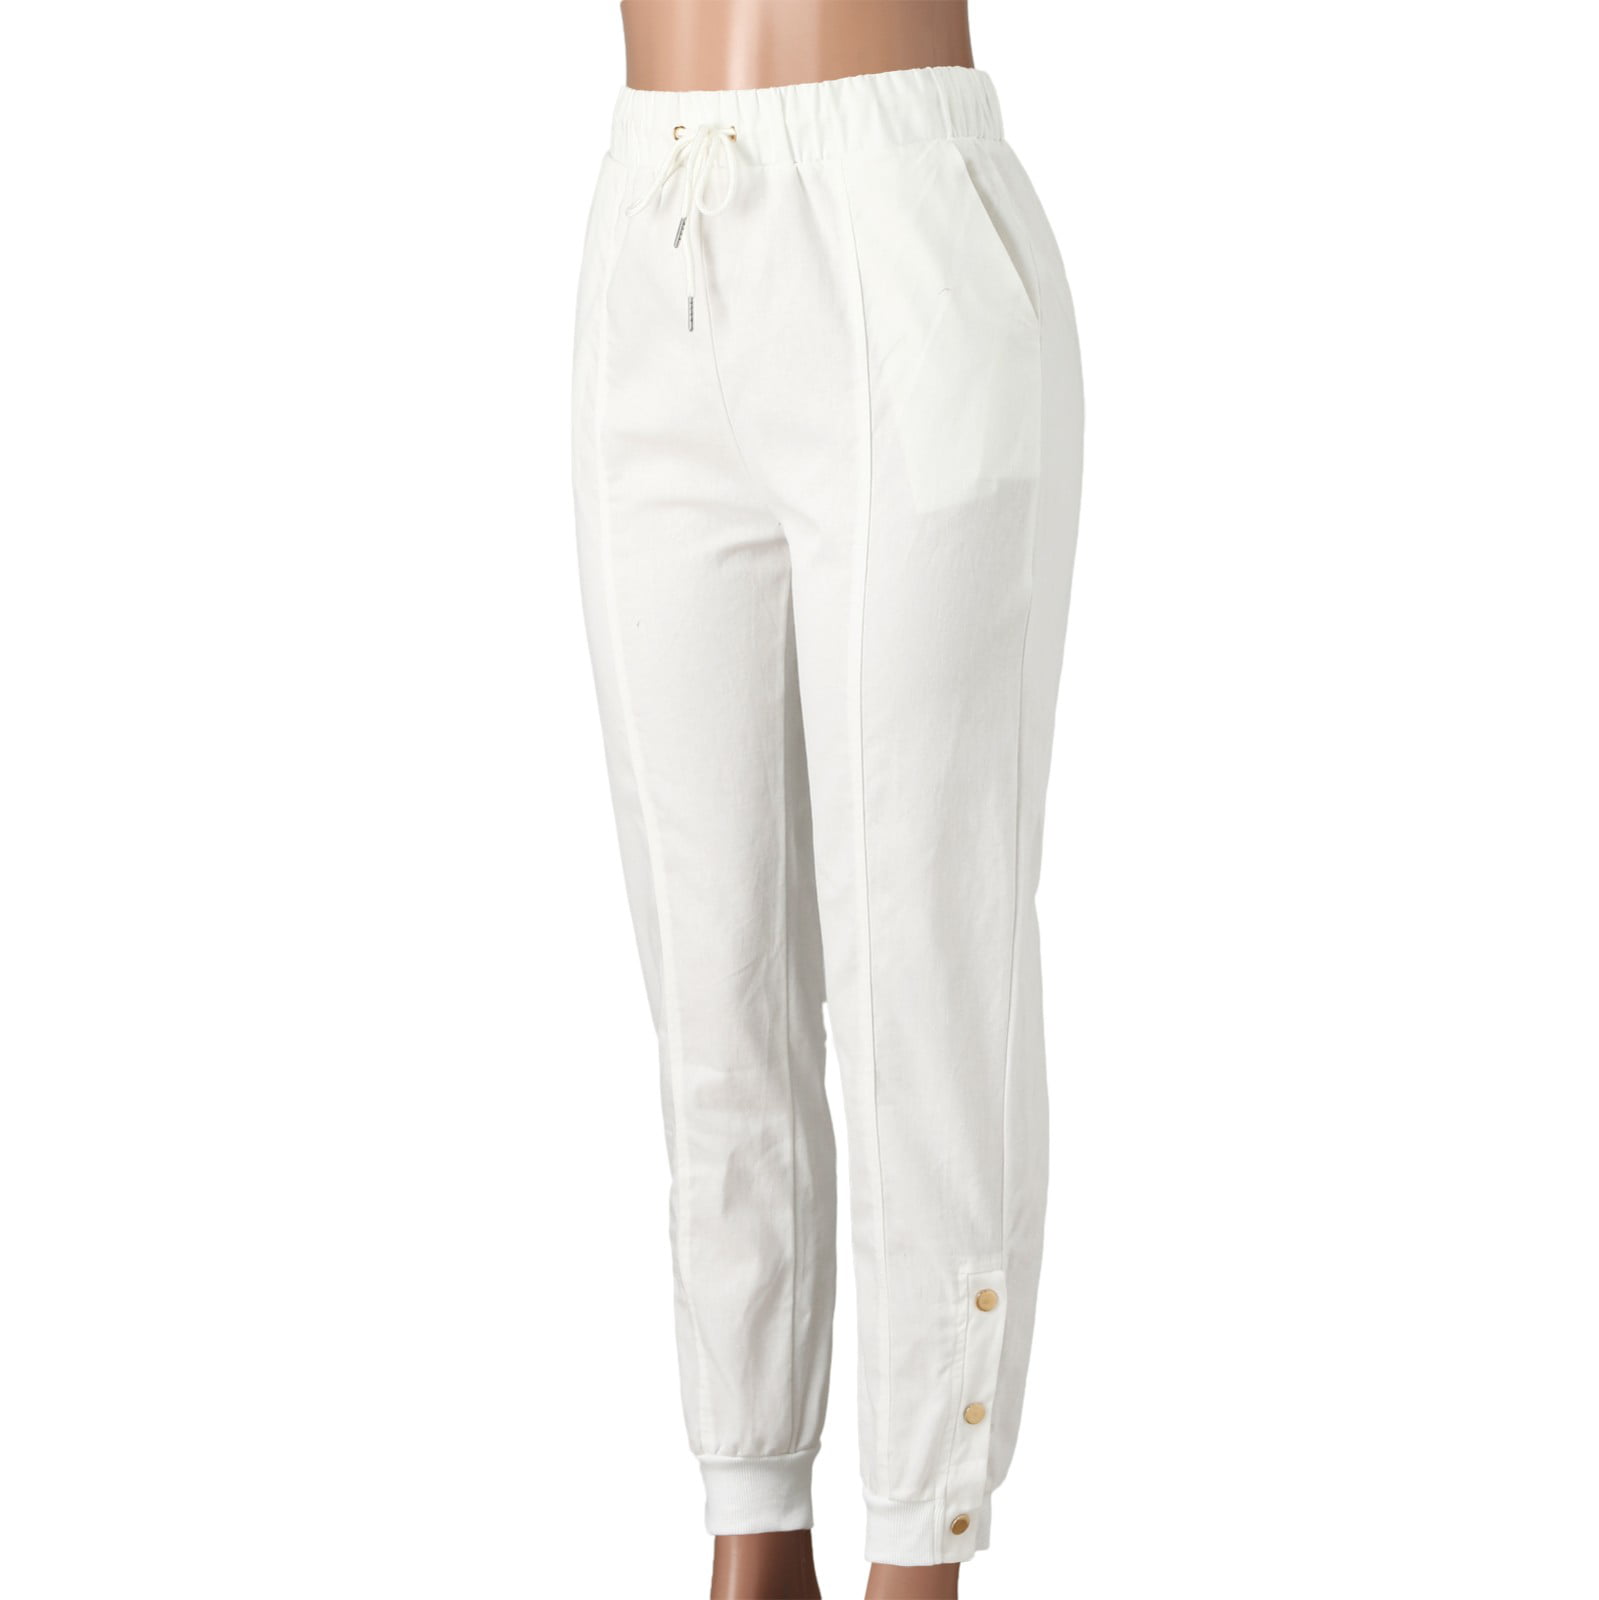 KaLI_store Dress Pants Women,Women's Tapered Pants 100% Linen Drawstring  Back Elastic Waist Ankle Length Pants - Walmart.com